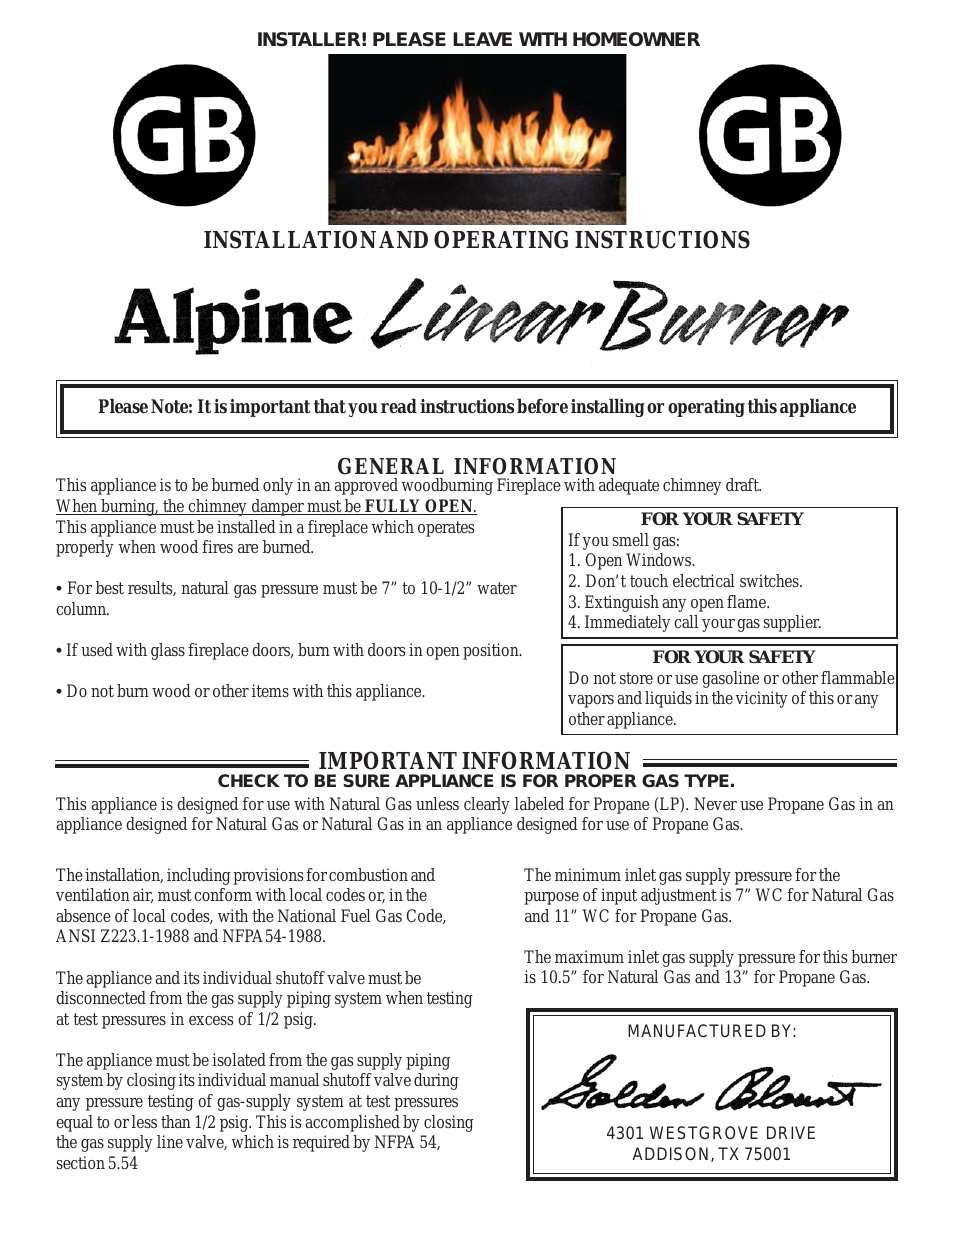 Alpine Linear Burner